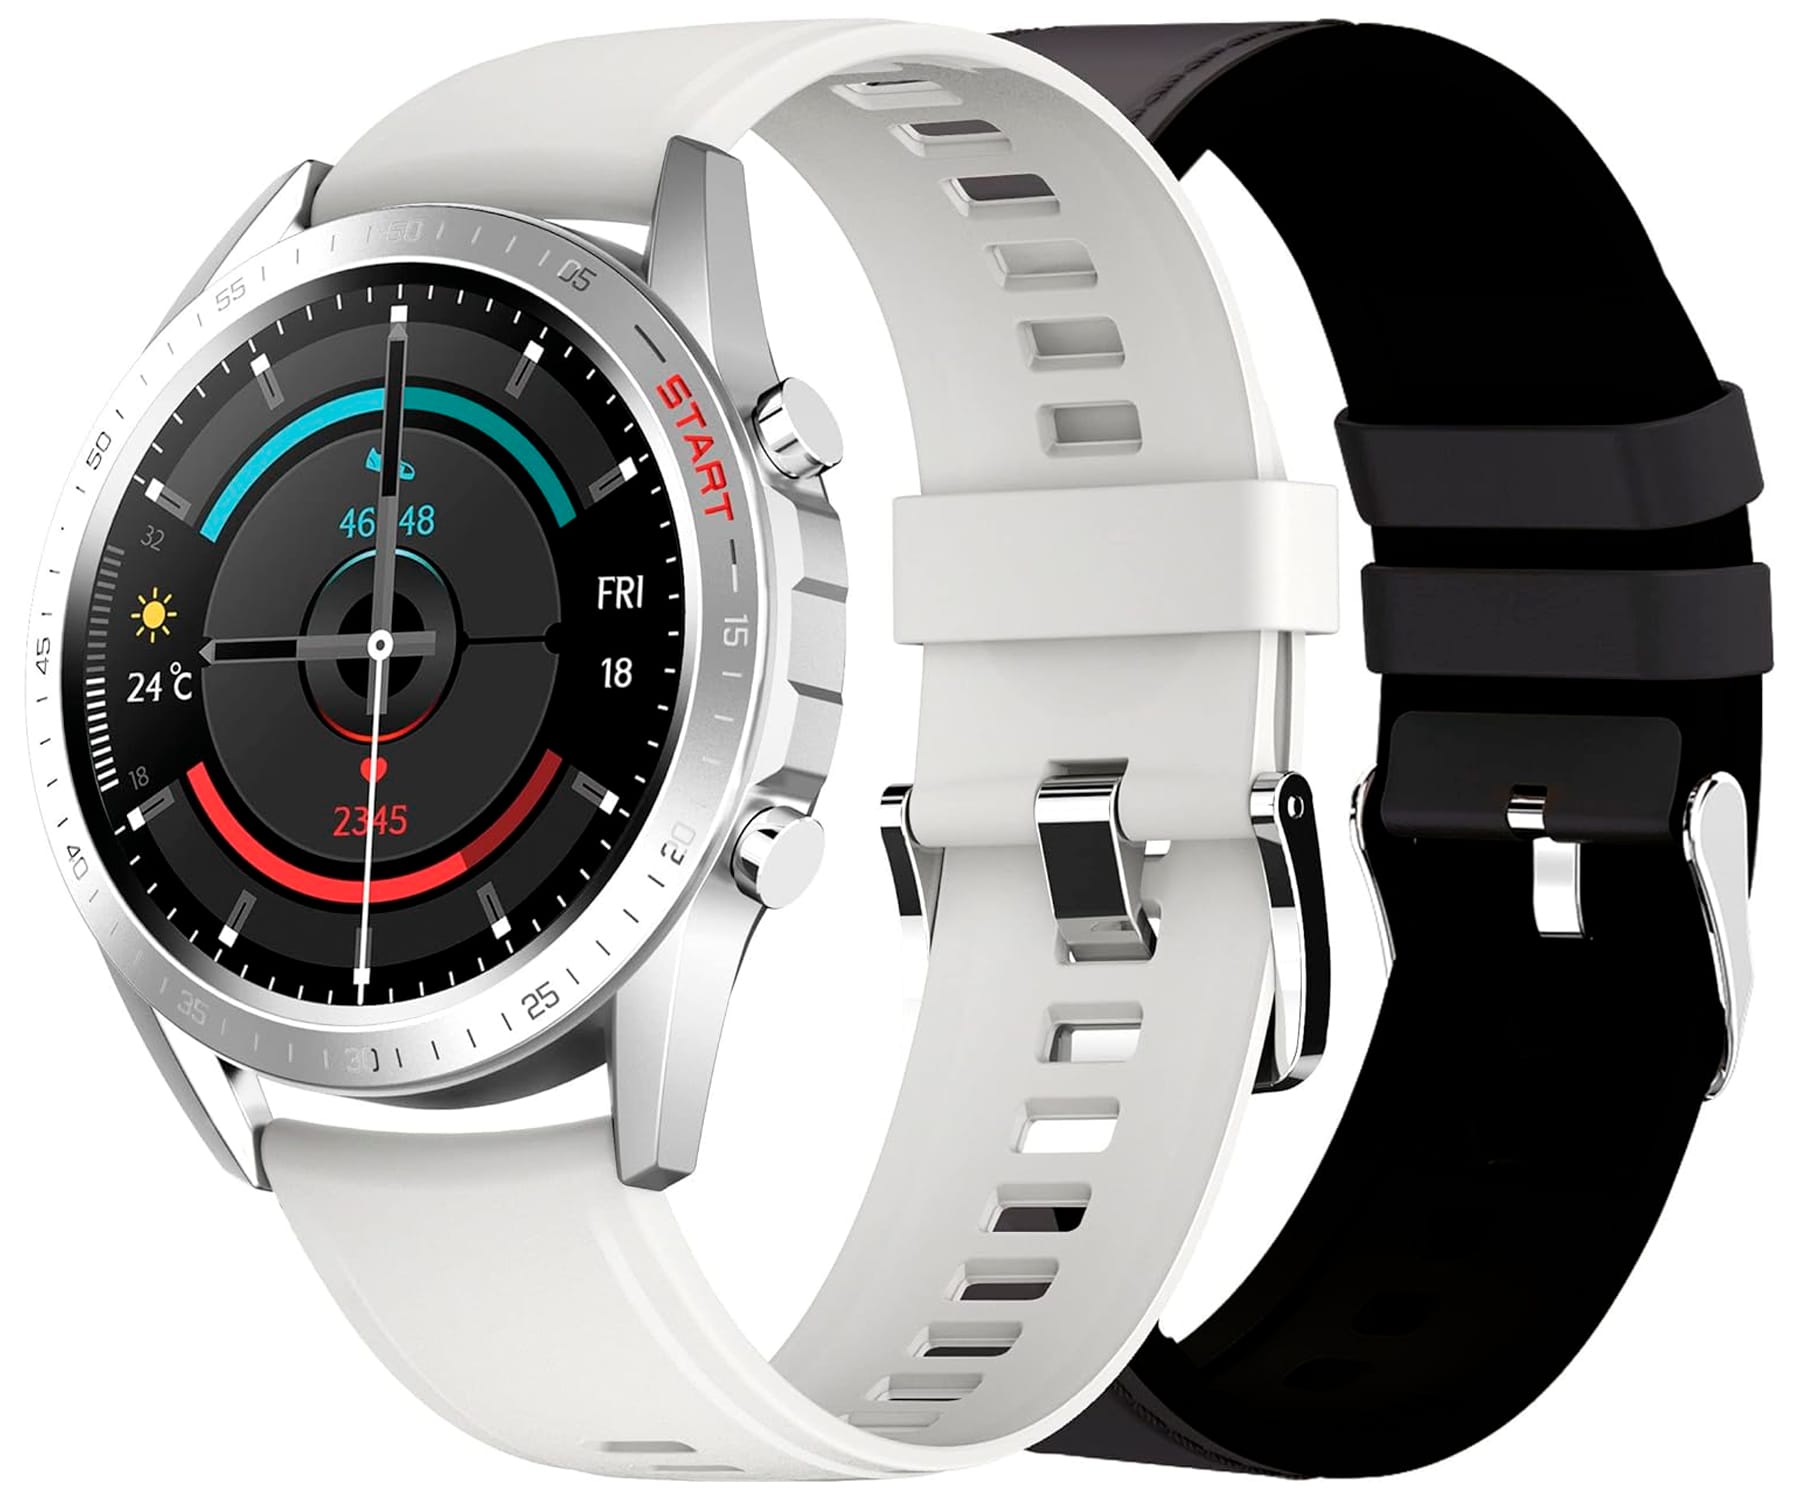 DCU Smartwatch Elegance 2 correas Negra + Blanca / Smartwatch 1.32"